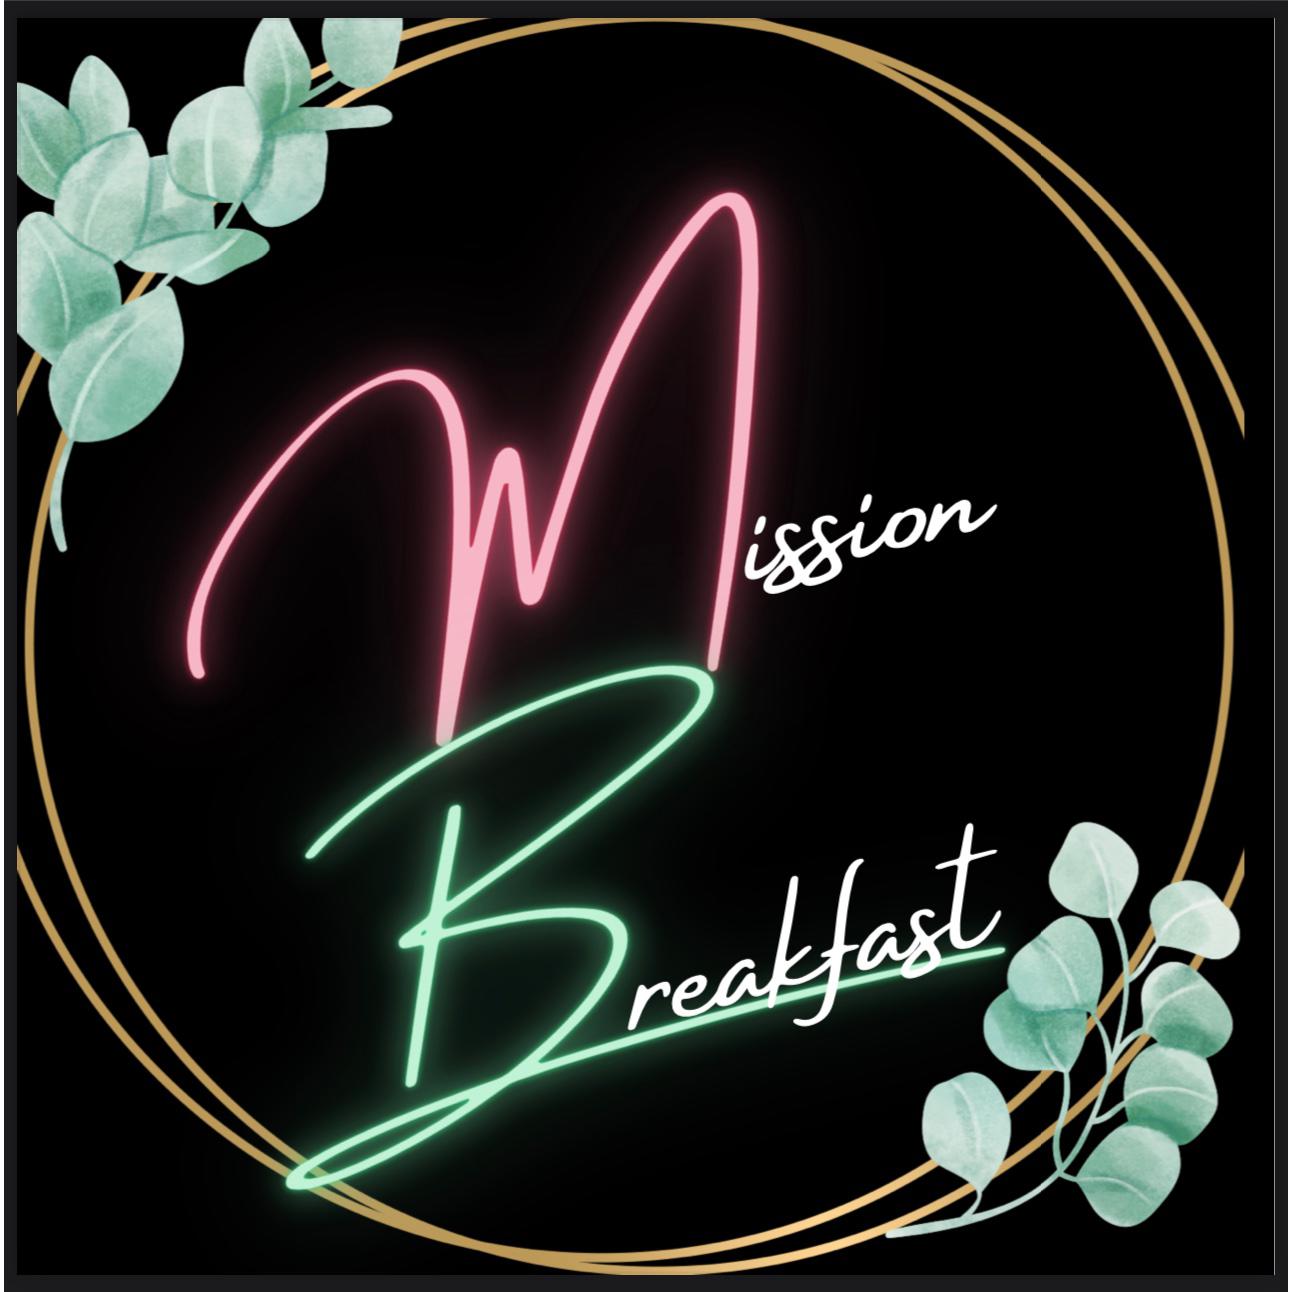 Logo Mission Breakfast